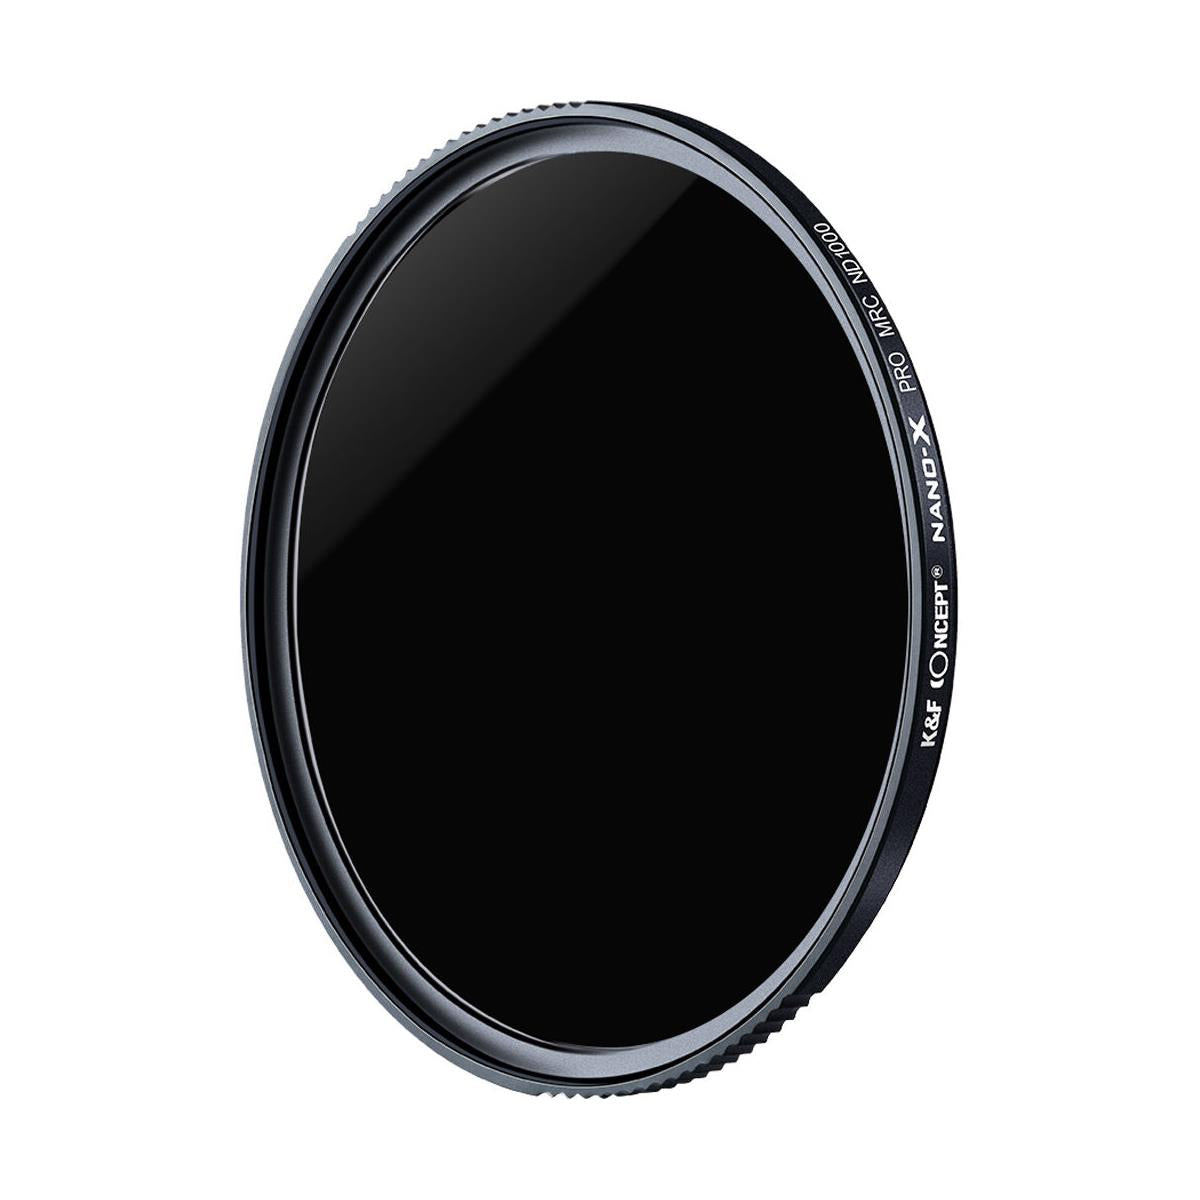 K&F Concept ND1000 Nano-X Filter 10-Stop Slim Lens Filter Waterproof Anti-Scratch Green Coated Lens Filter for Camera DSLR Mirrorless 37mm 40.5mm 43mm 46mm 49mm 52mm 55mm 58mm 62mm 67mm 72mm 77mm 82mm